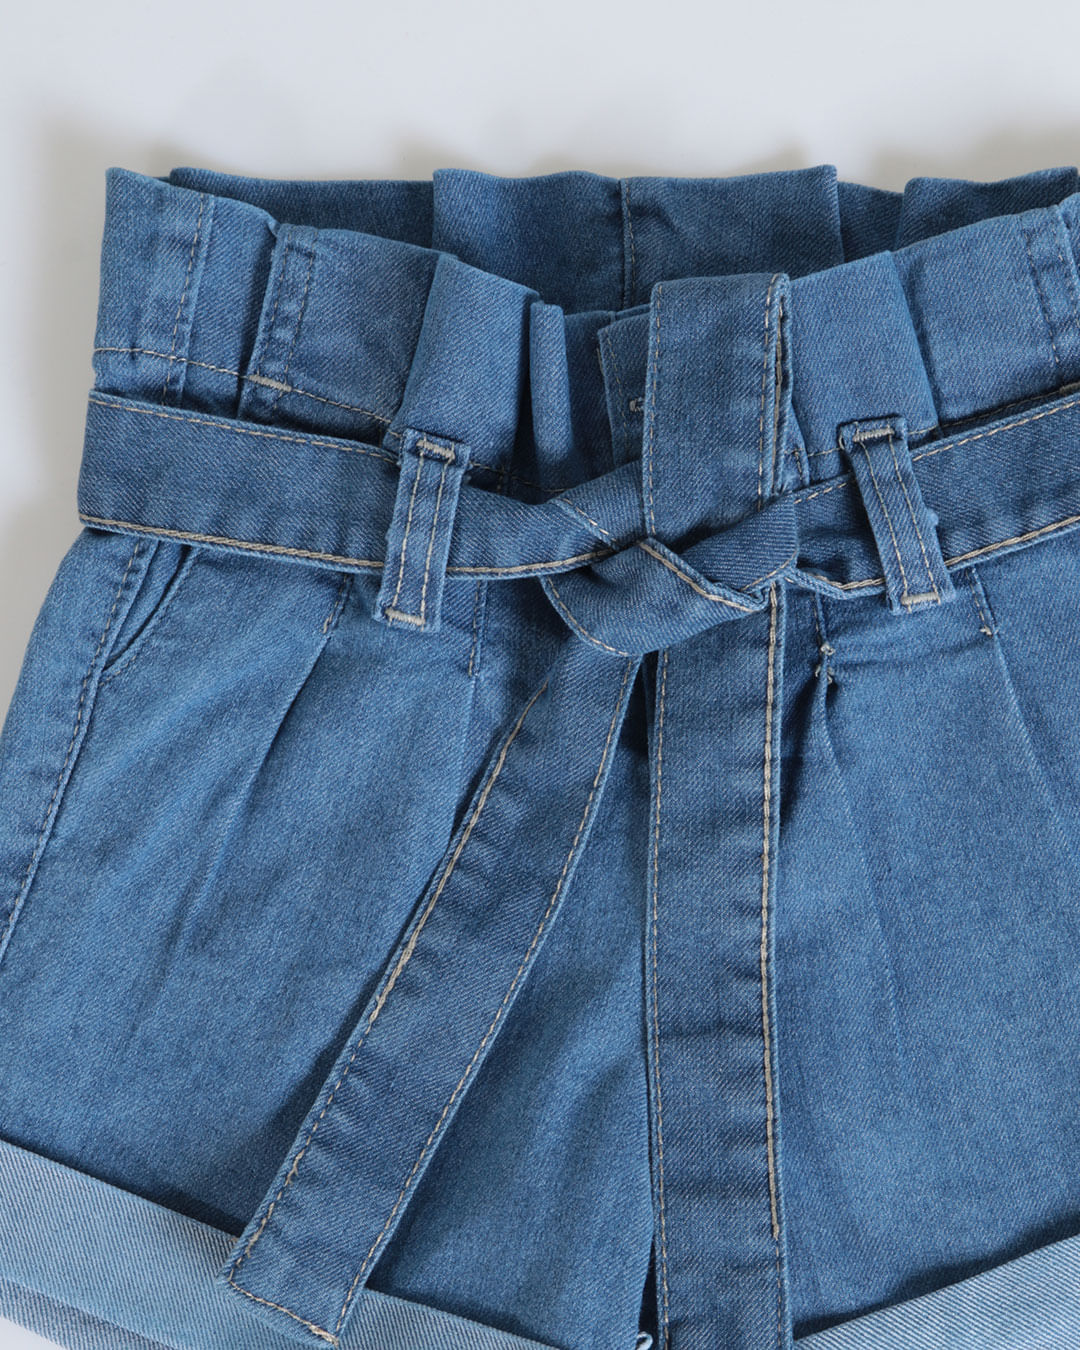 Shorts-Clochard-Lc--Fem-13---Blue-Jeans-Claro